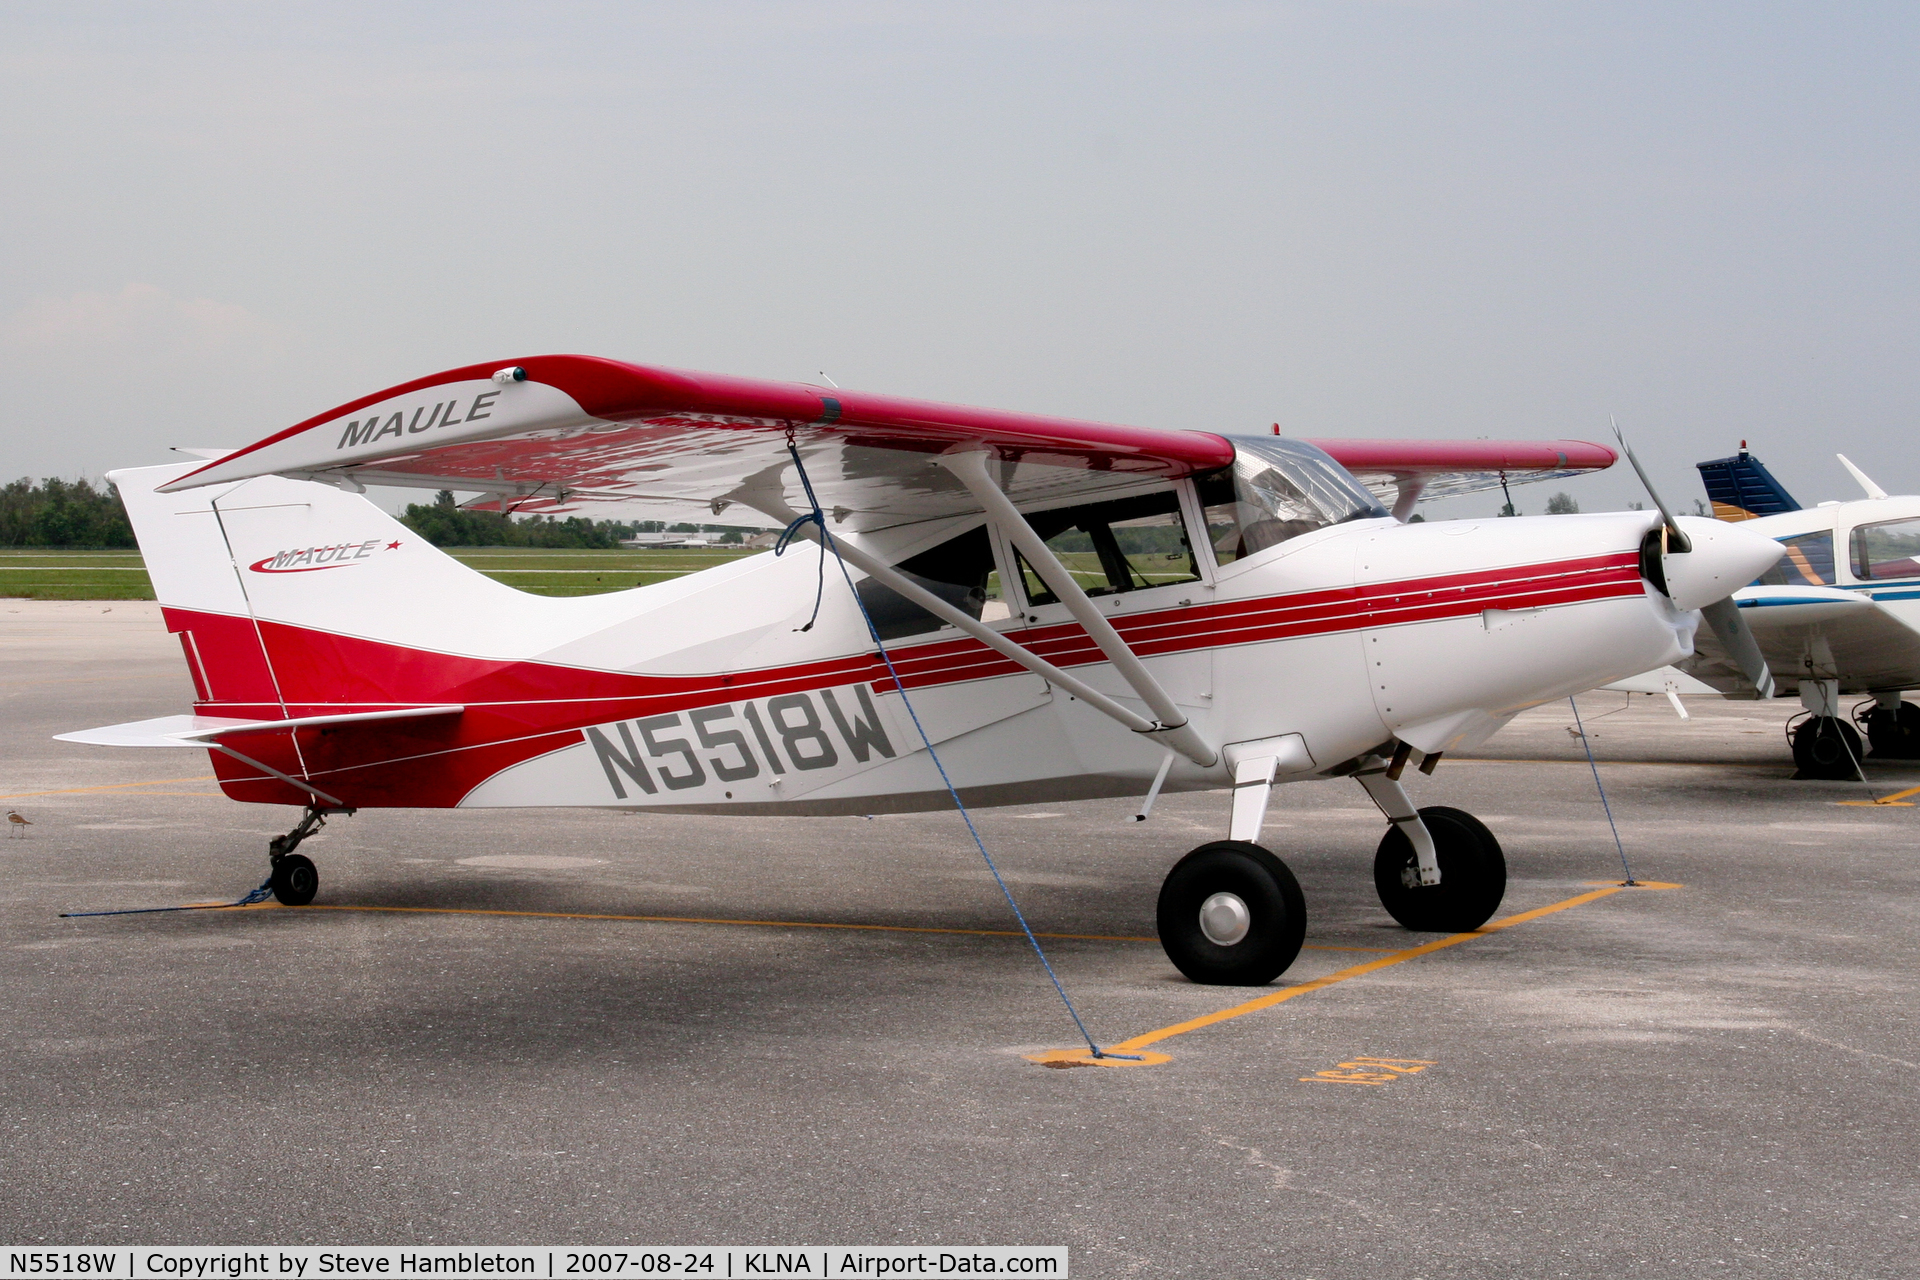 N5518W, 2004 Maule MX-7-180AC Sportplane C/N 33005C, Smart looking Maule at Lantana, FL